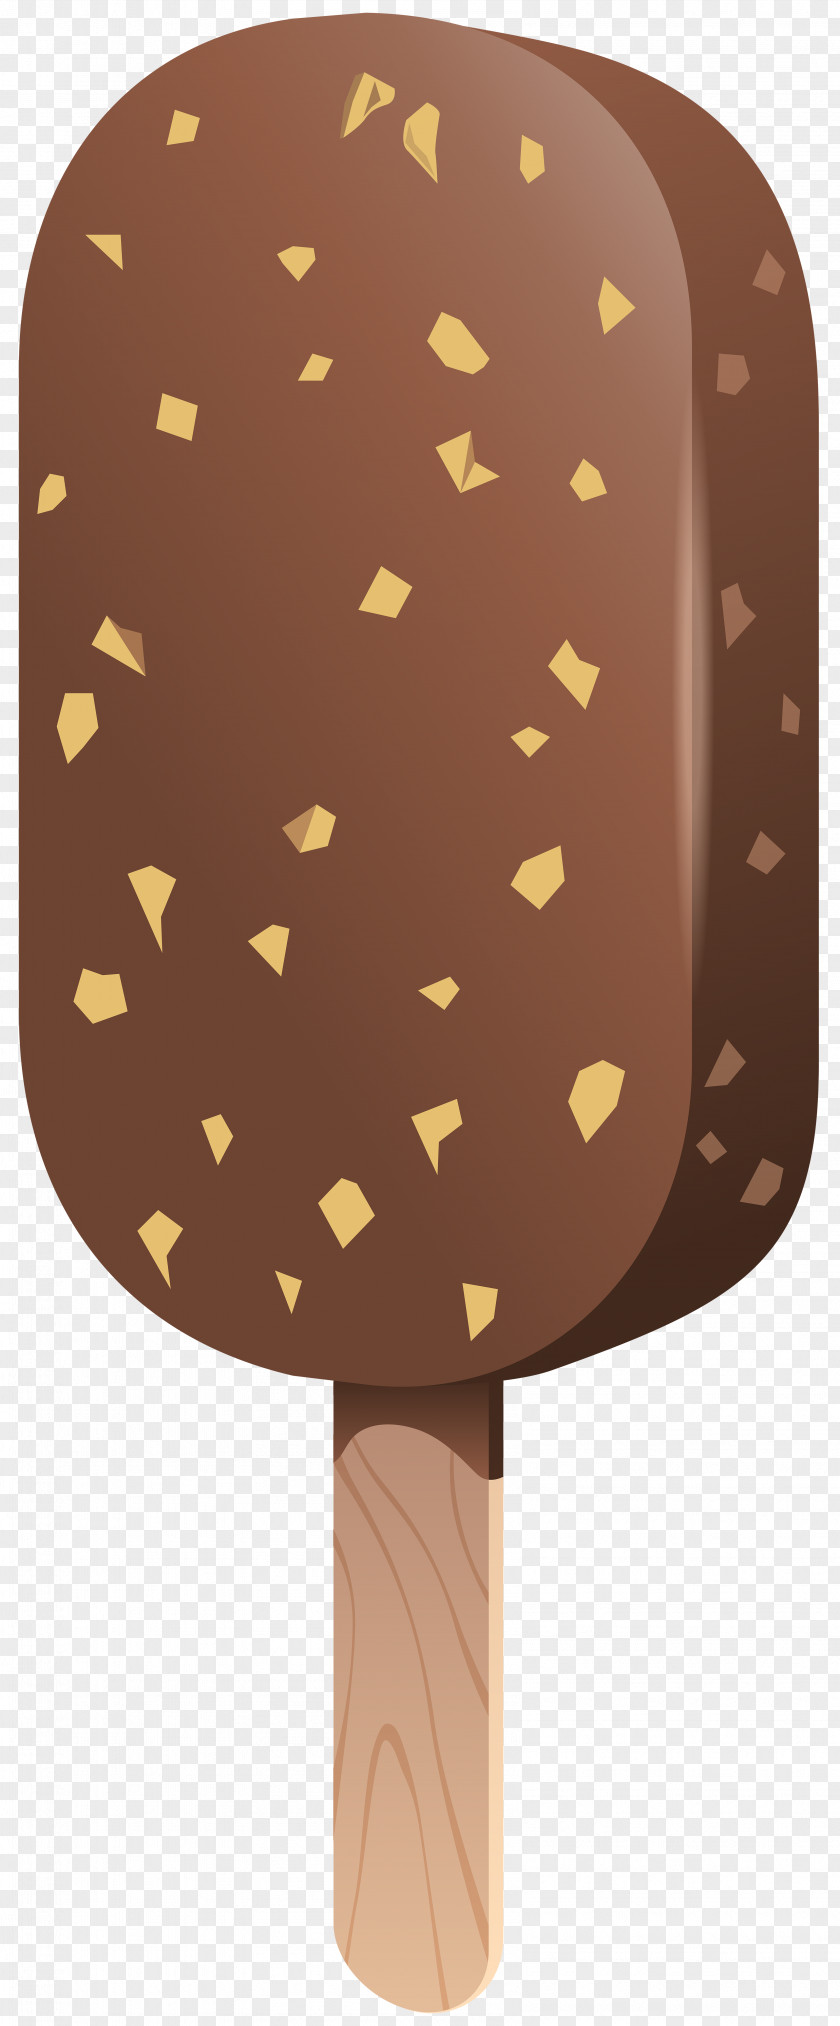 Ice Cream Stick Clip Art Image Cone Pop PNG